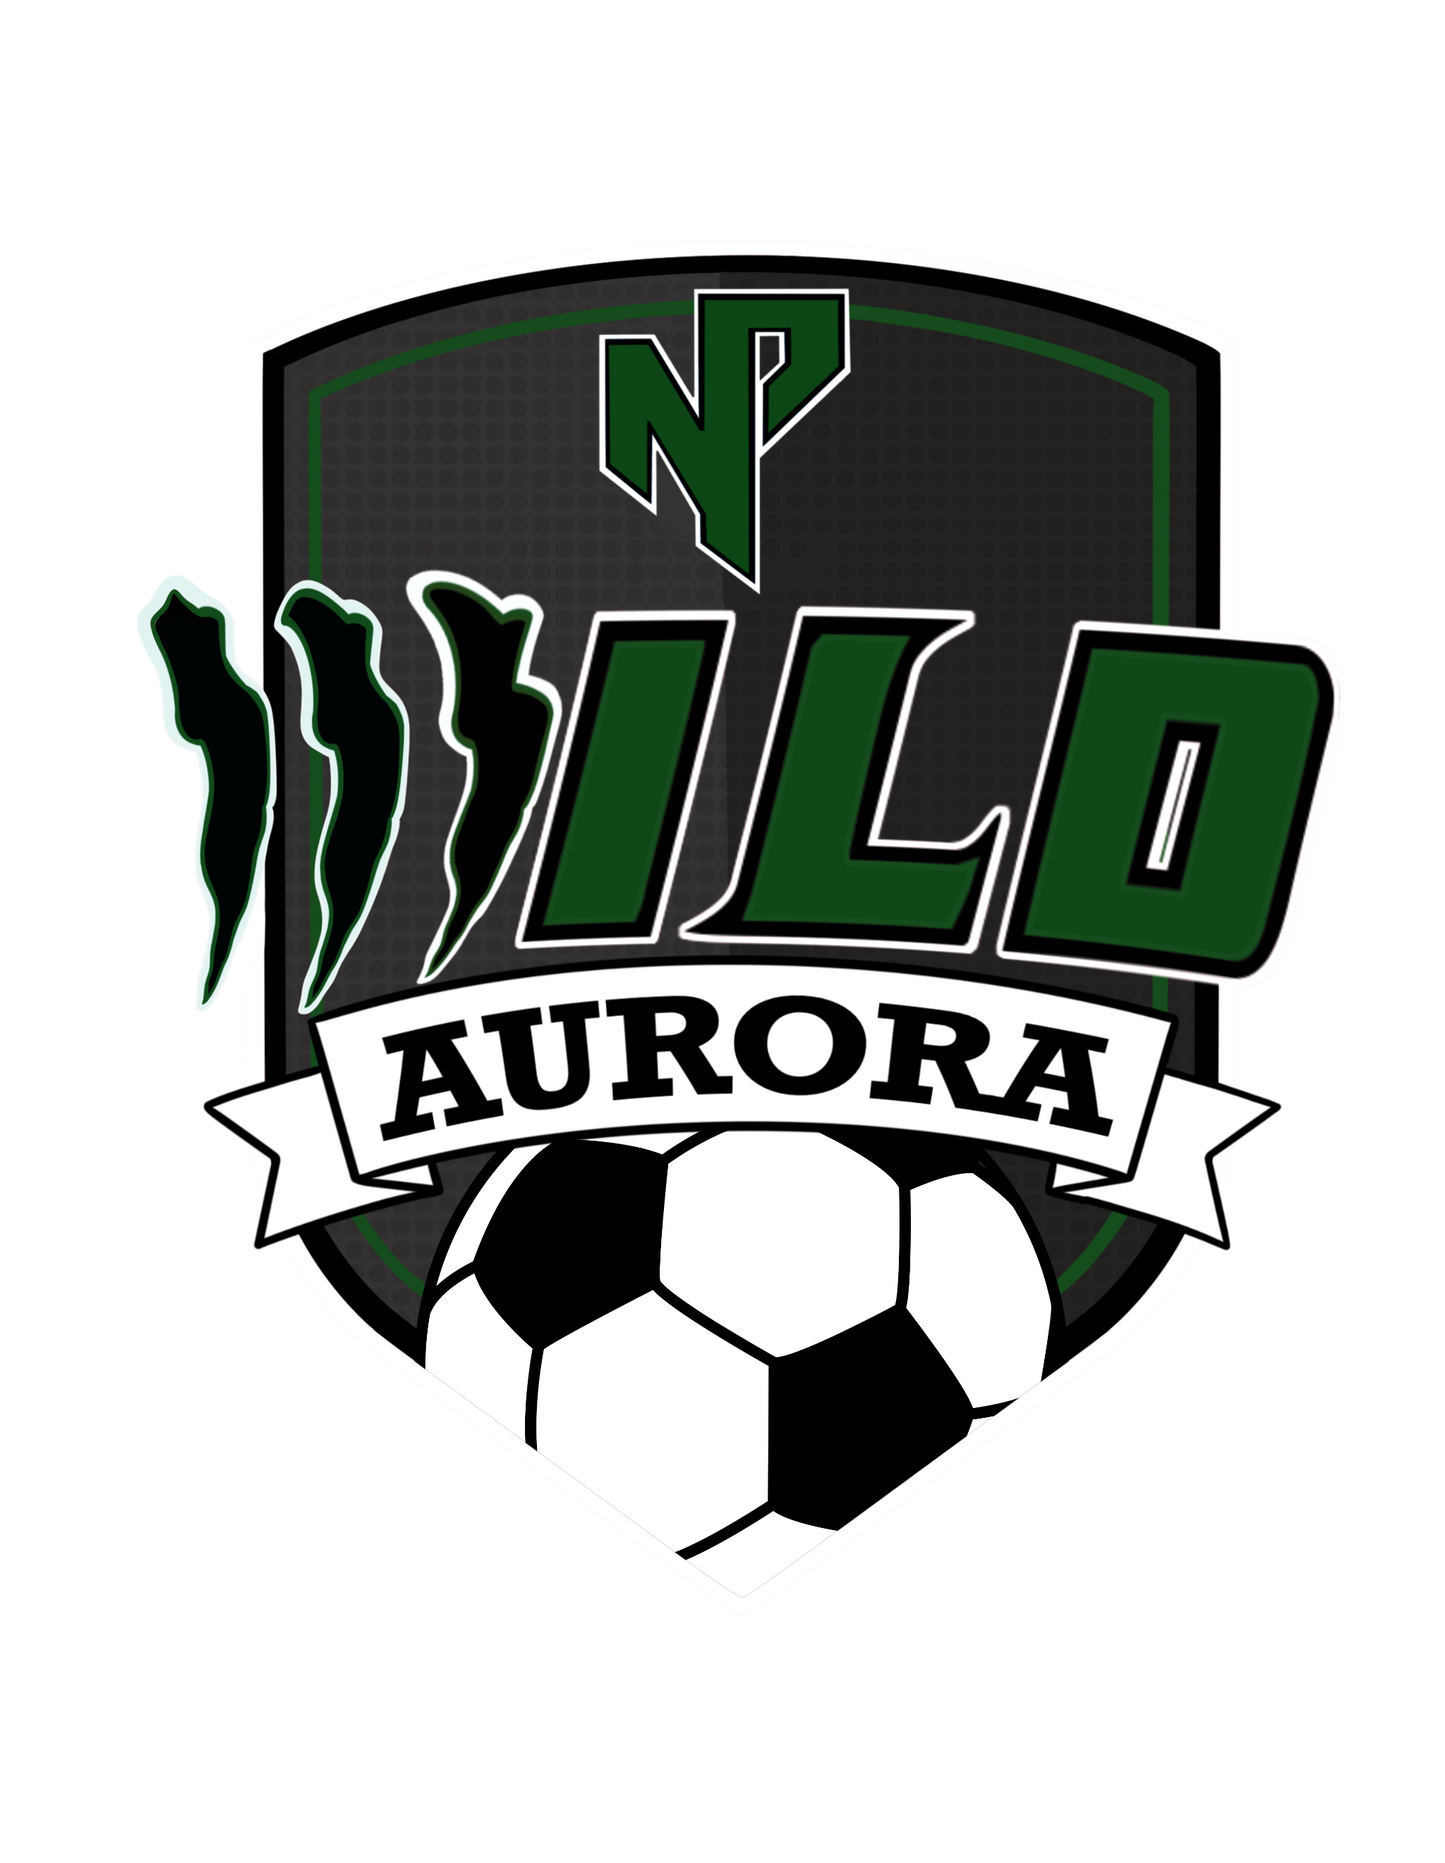 Aurora NP Soccer Registration - Full participation